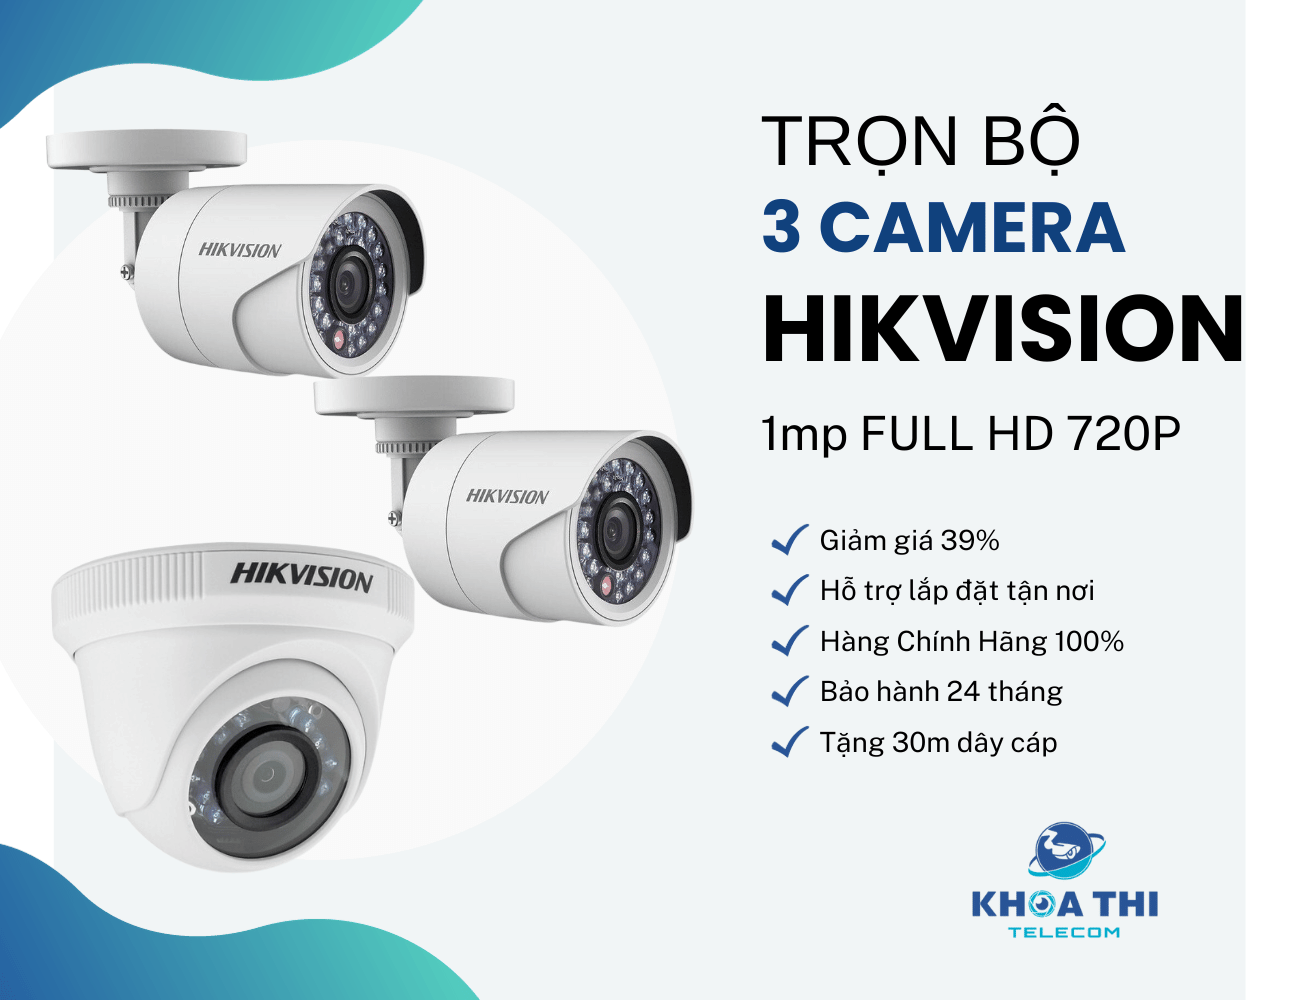 Trọn bộ 3 camera Hikvision 1MP